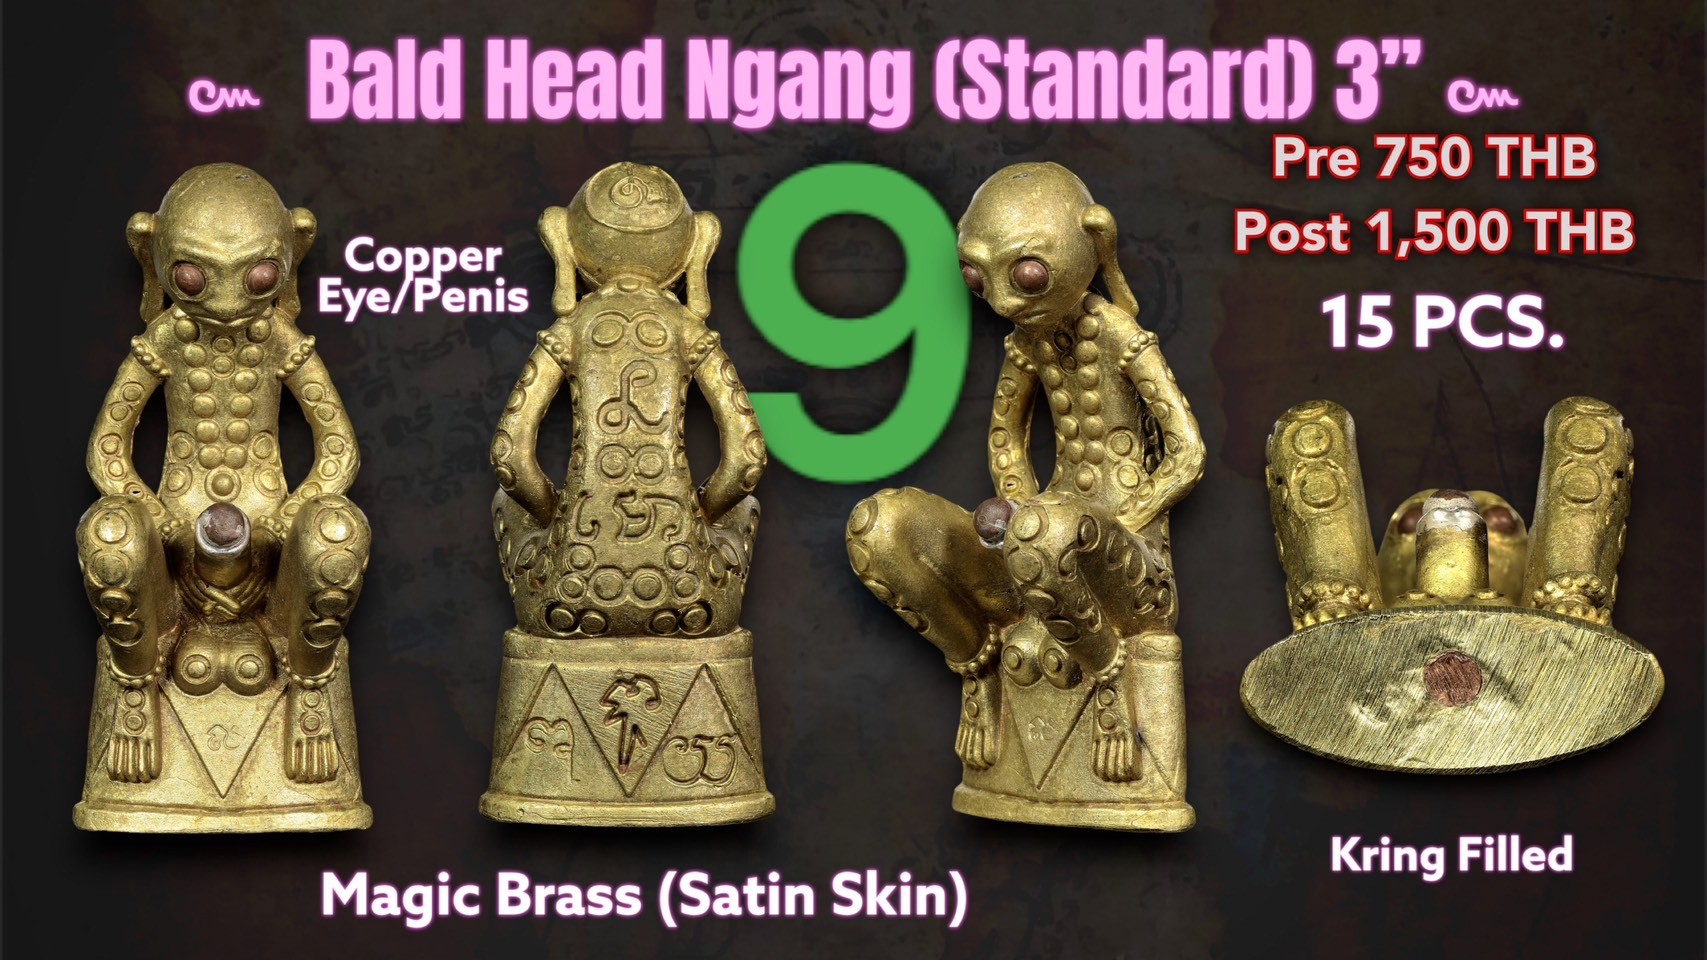 9.Bald Head Ngang Magic Brass (Satin Skin) 3 inches